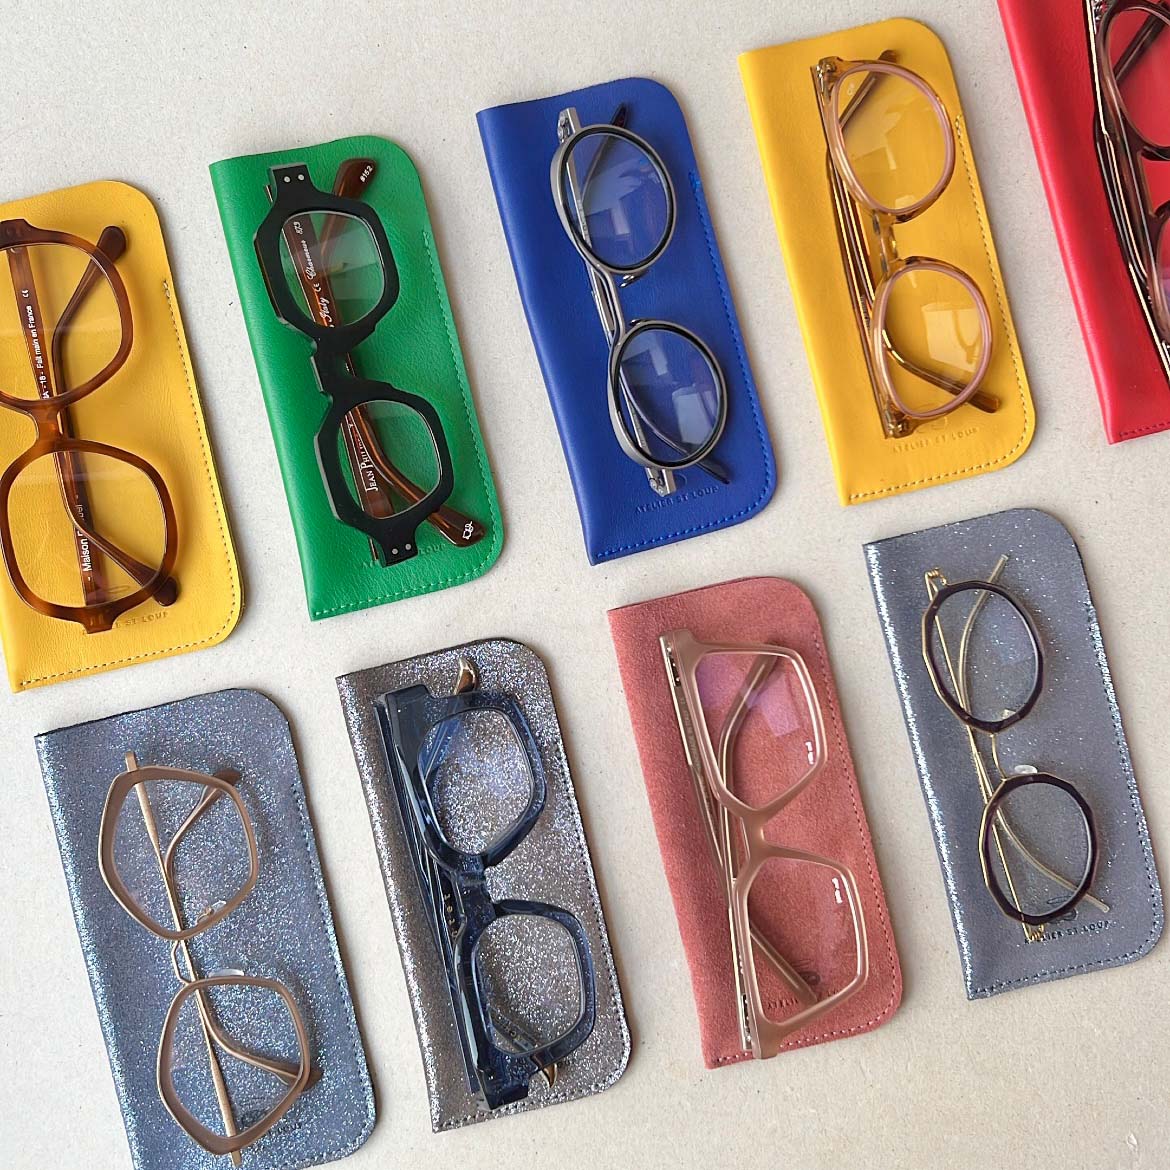 Glasses accessories